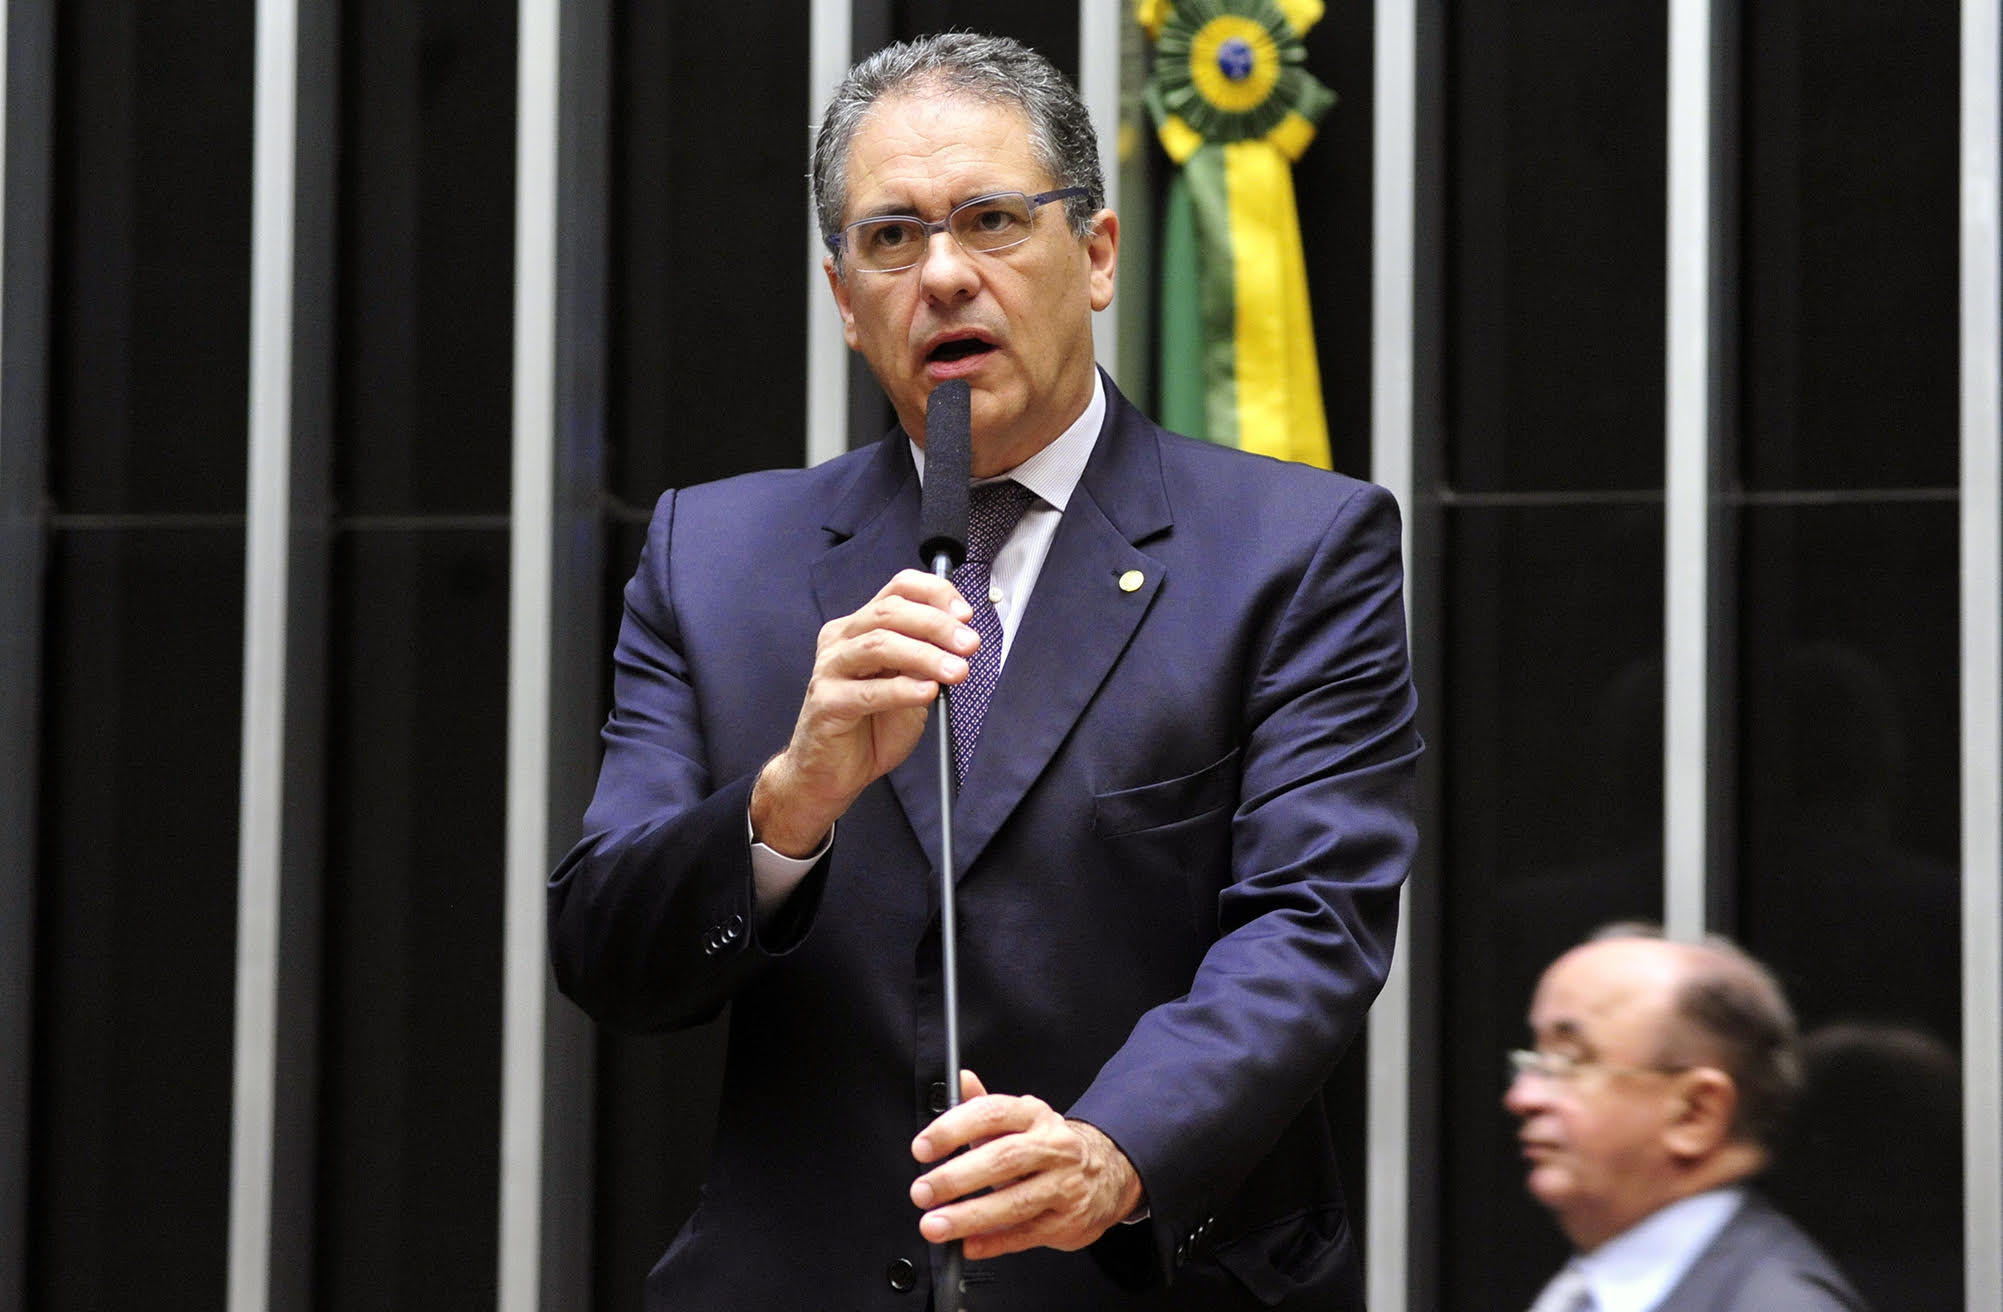 “Só Haddad pode salvar o Brasil”, afirma Zarattini